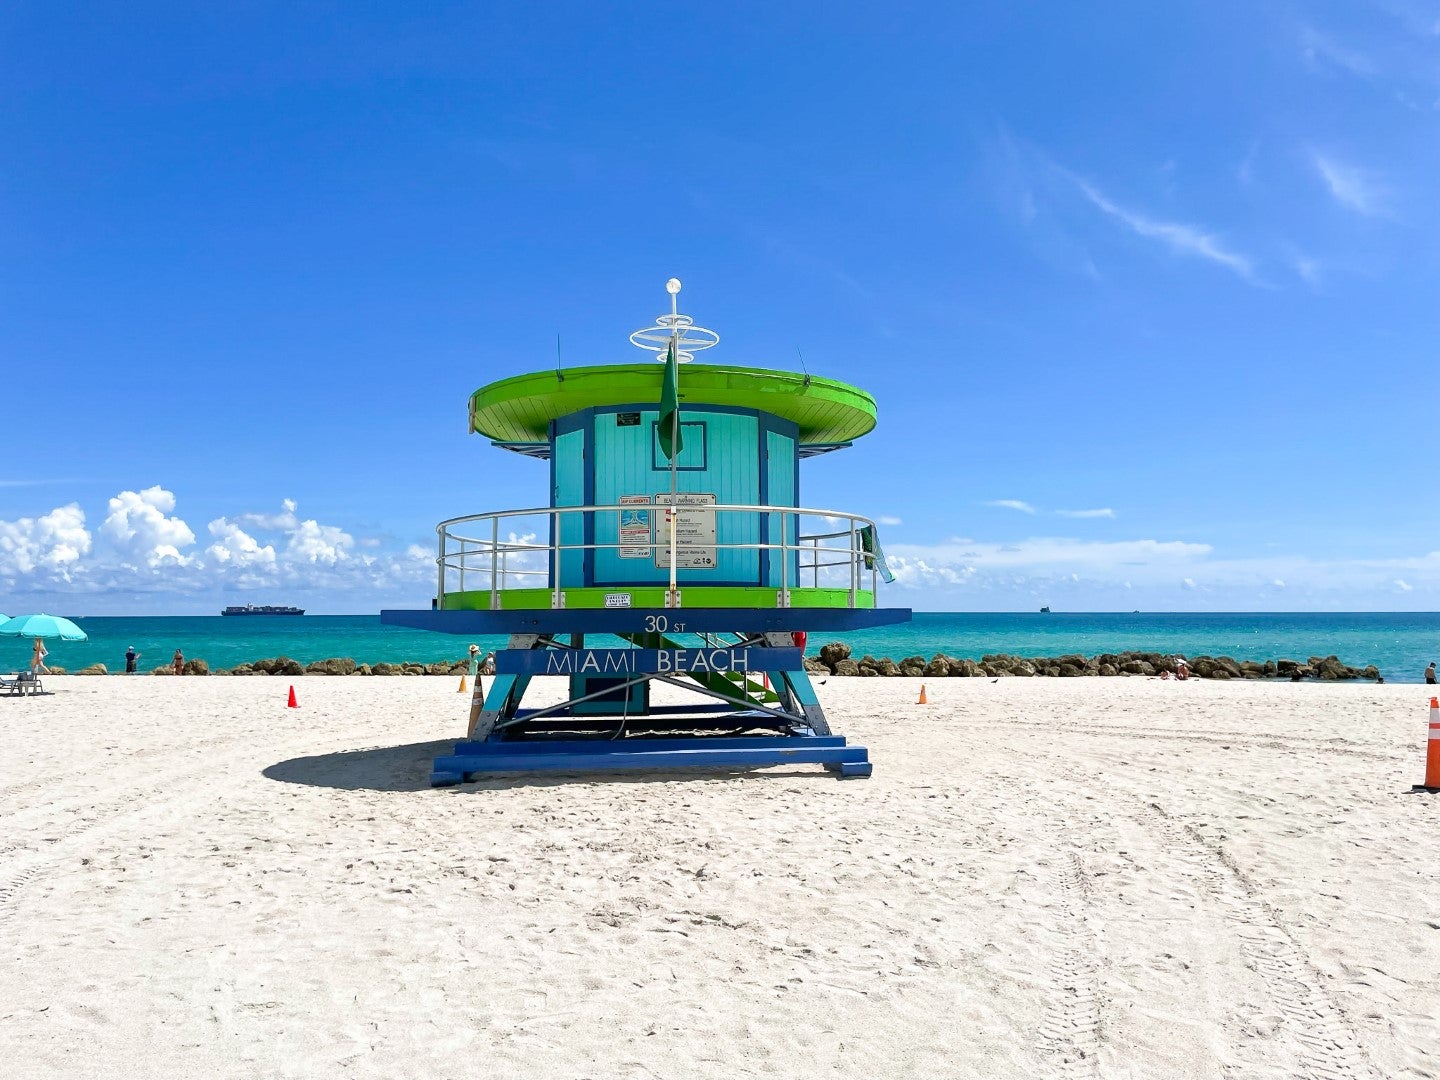 The Miami Beach EDITION Lifeguard tower Marriott